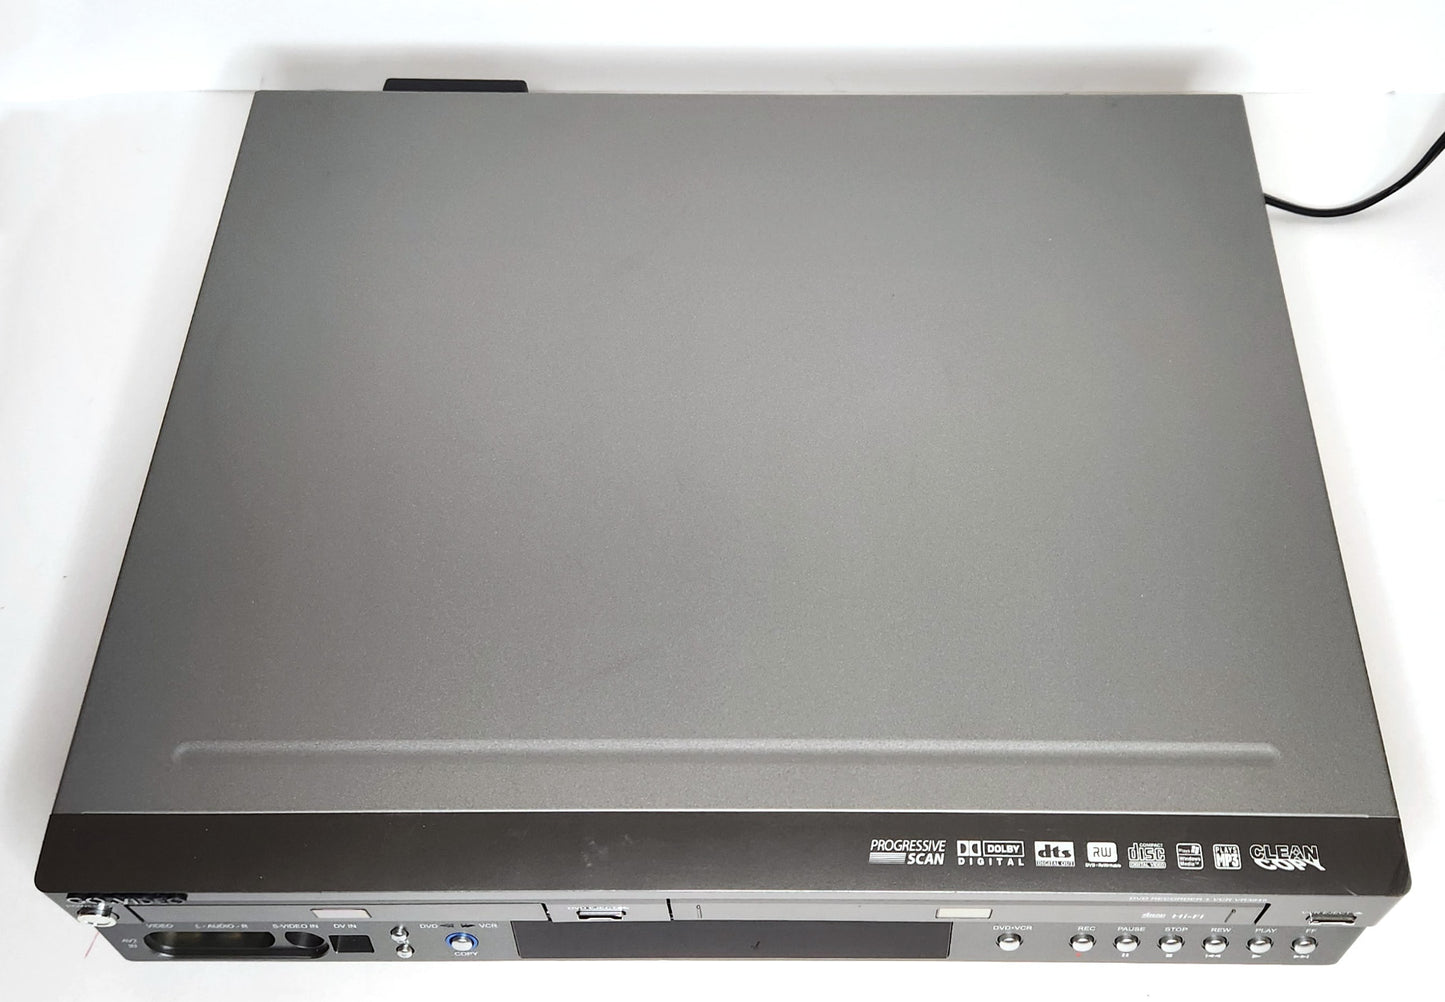 GoVideo VR3845 VCR/DVD Recorder Combo - Top